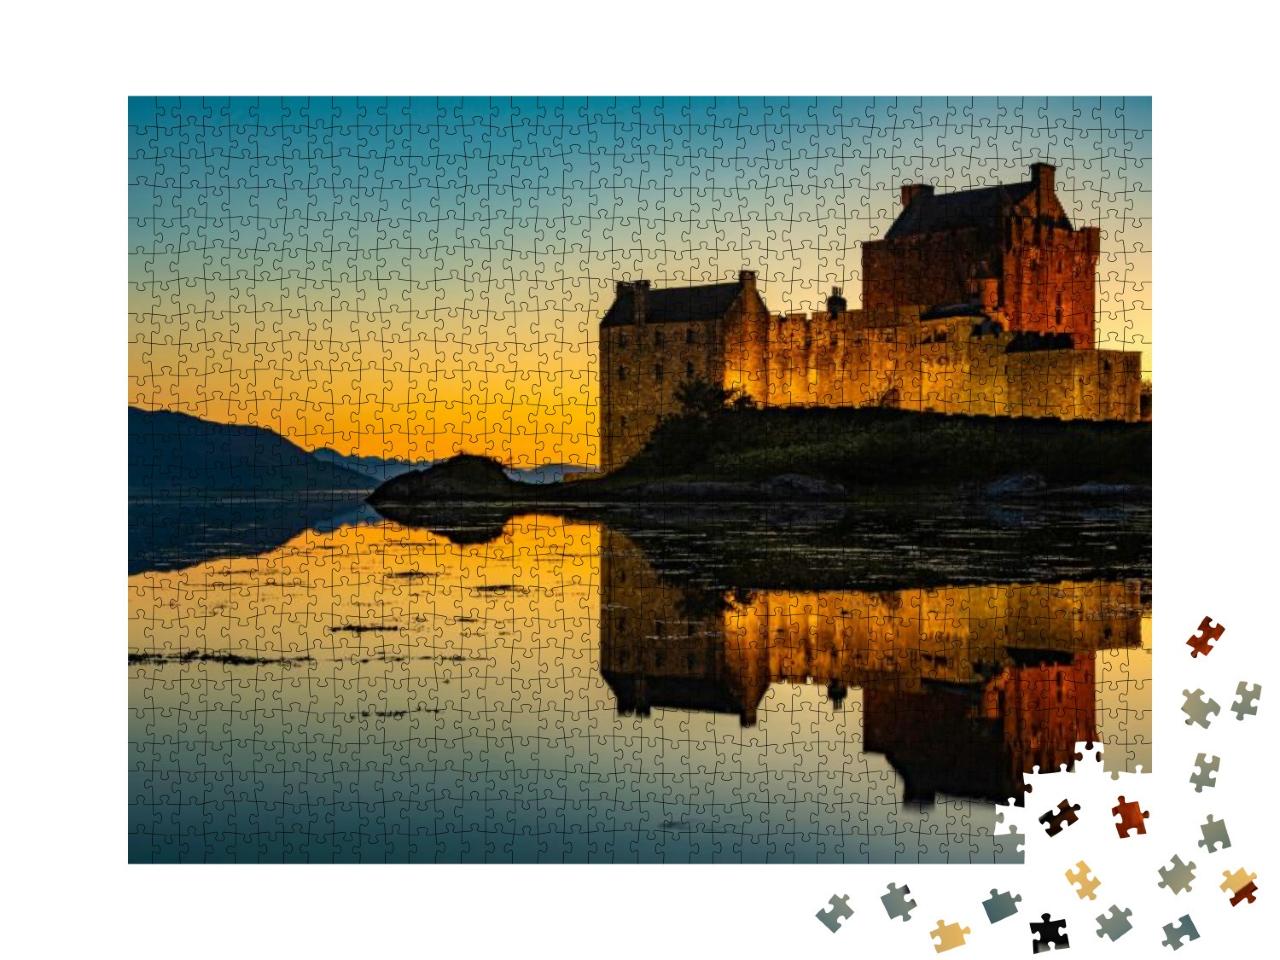 Sunset At Eilean Donan Castle, Dornie, Highlands, Scotlan... Jigsaw Puzzle with 1000 pieces